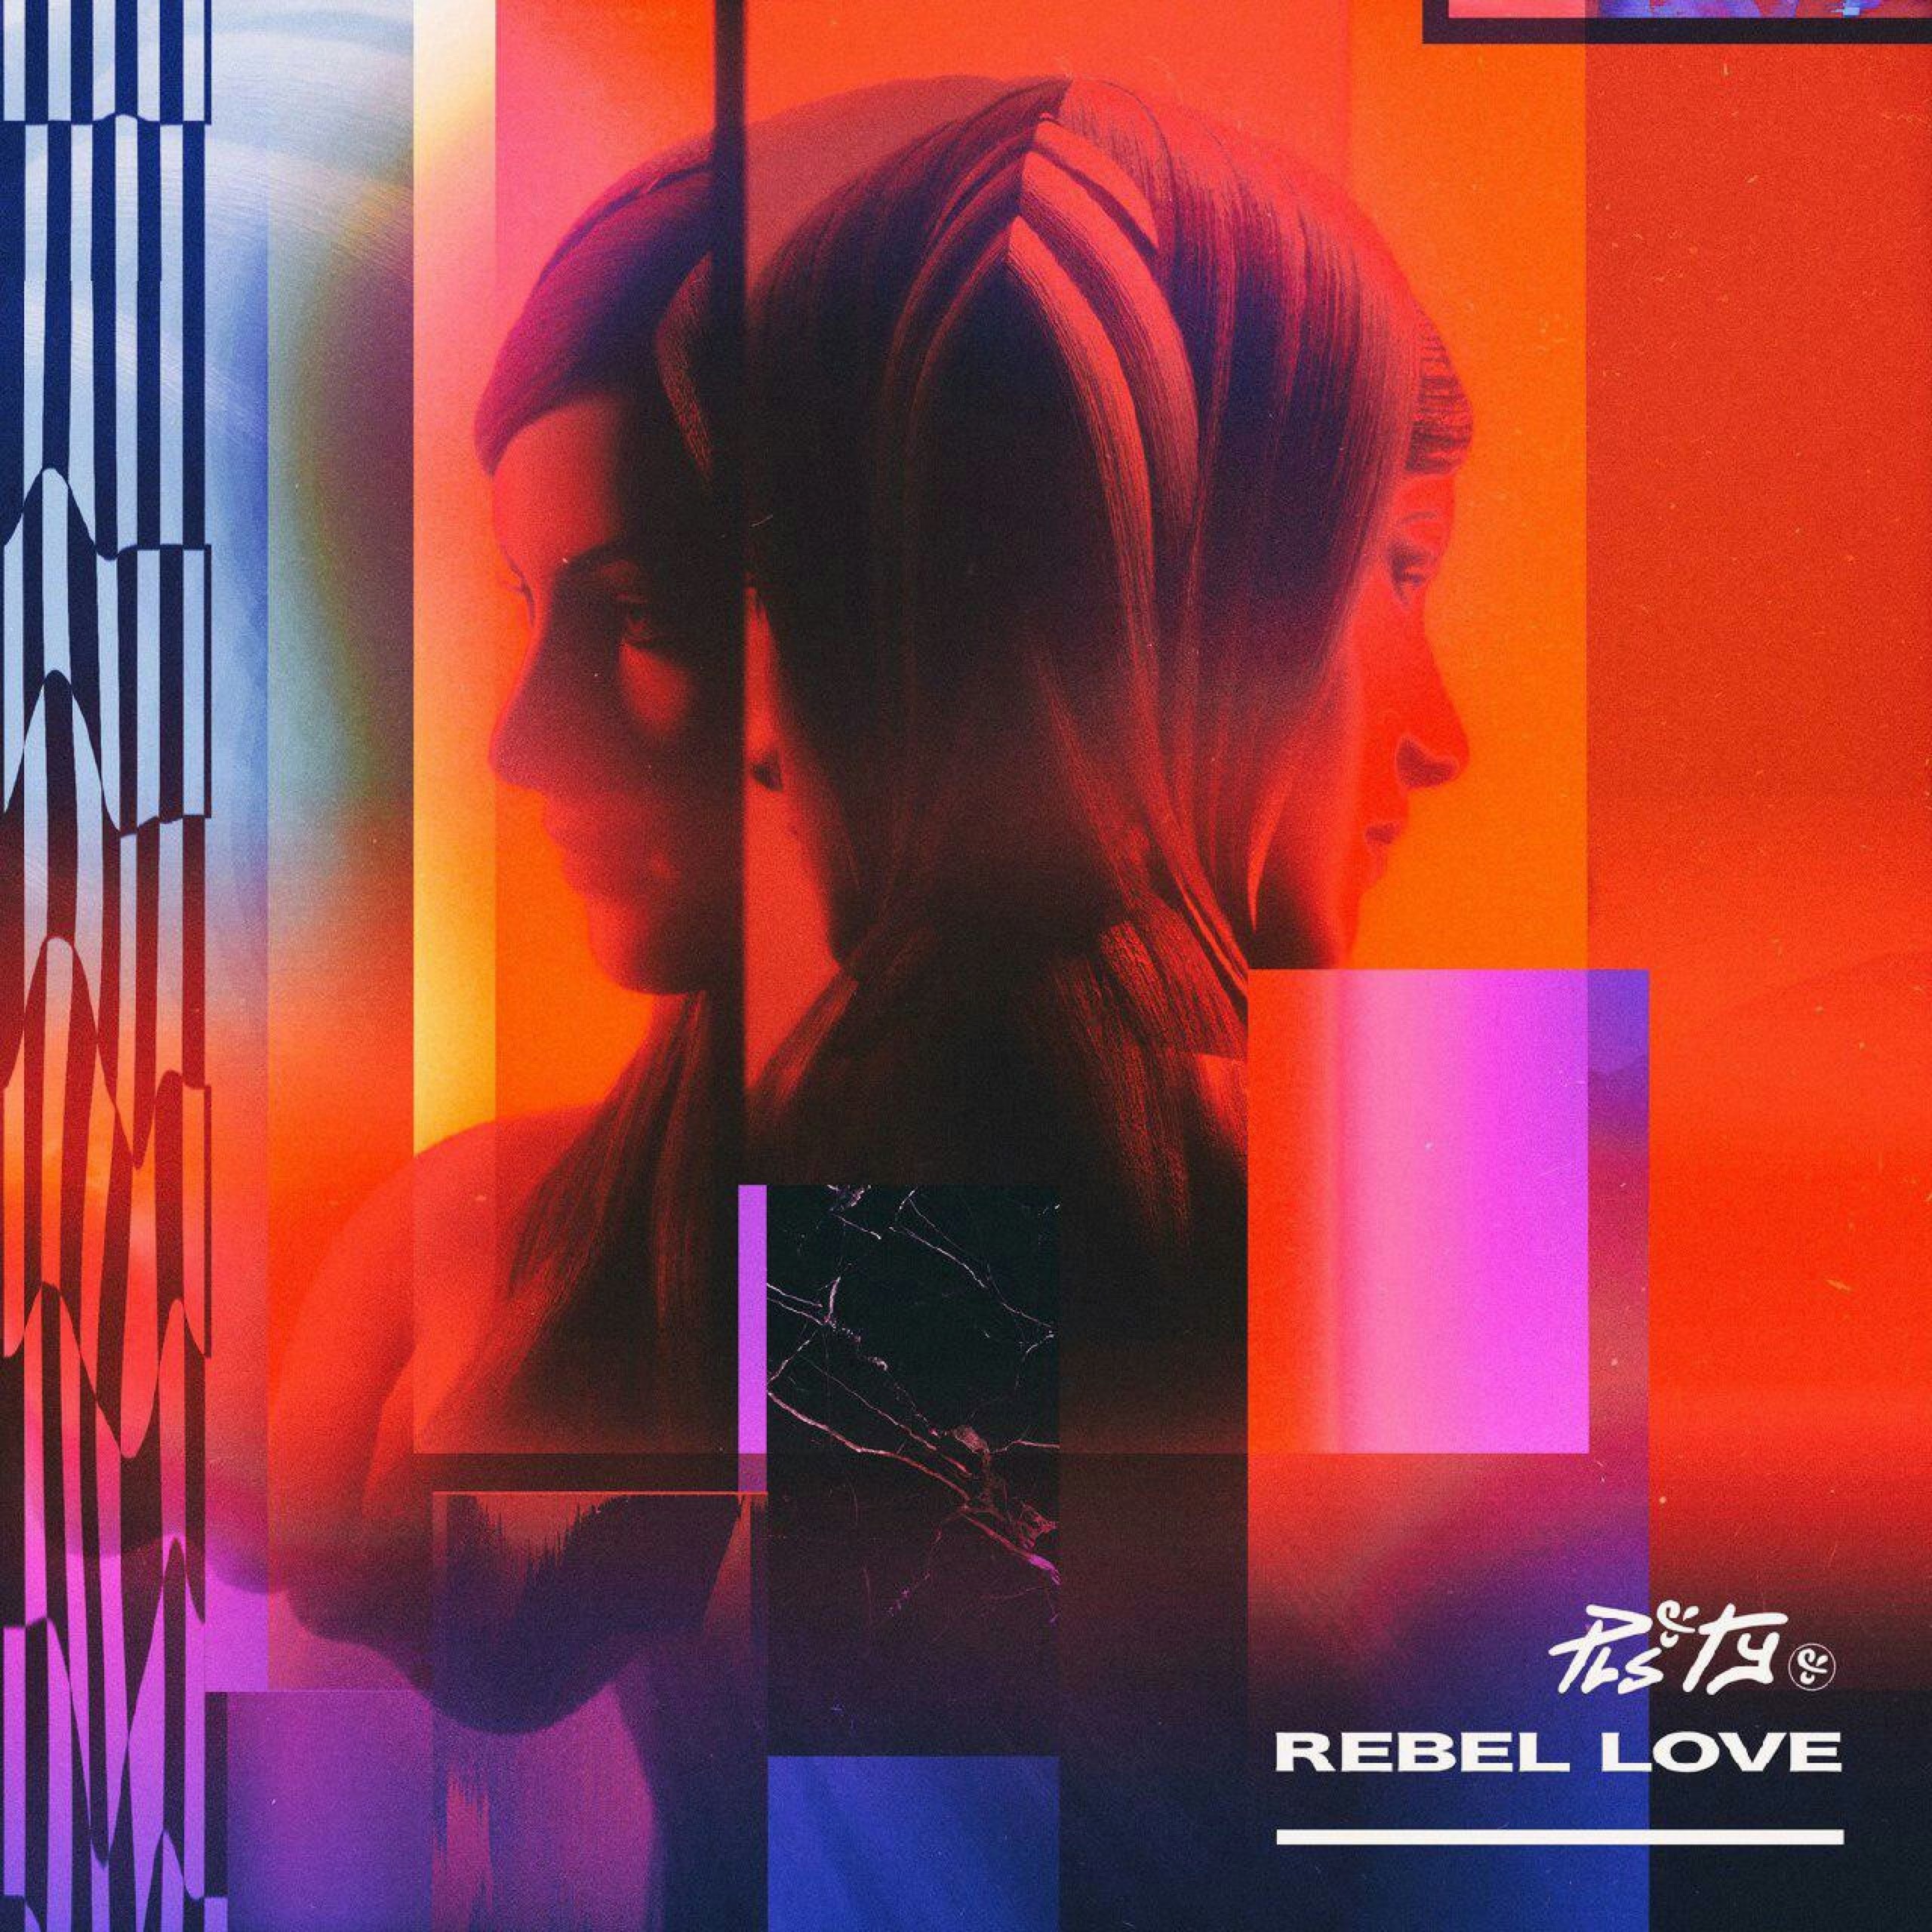 Rebel Love